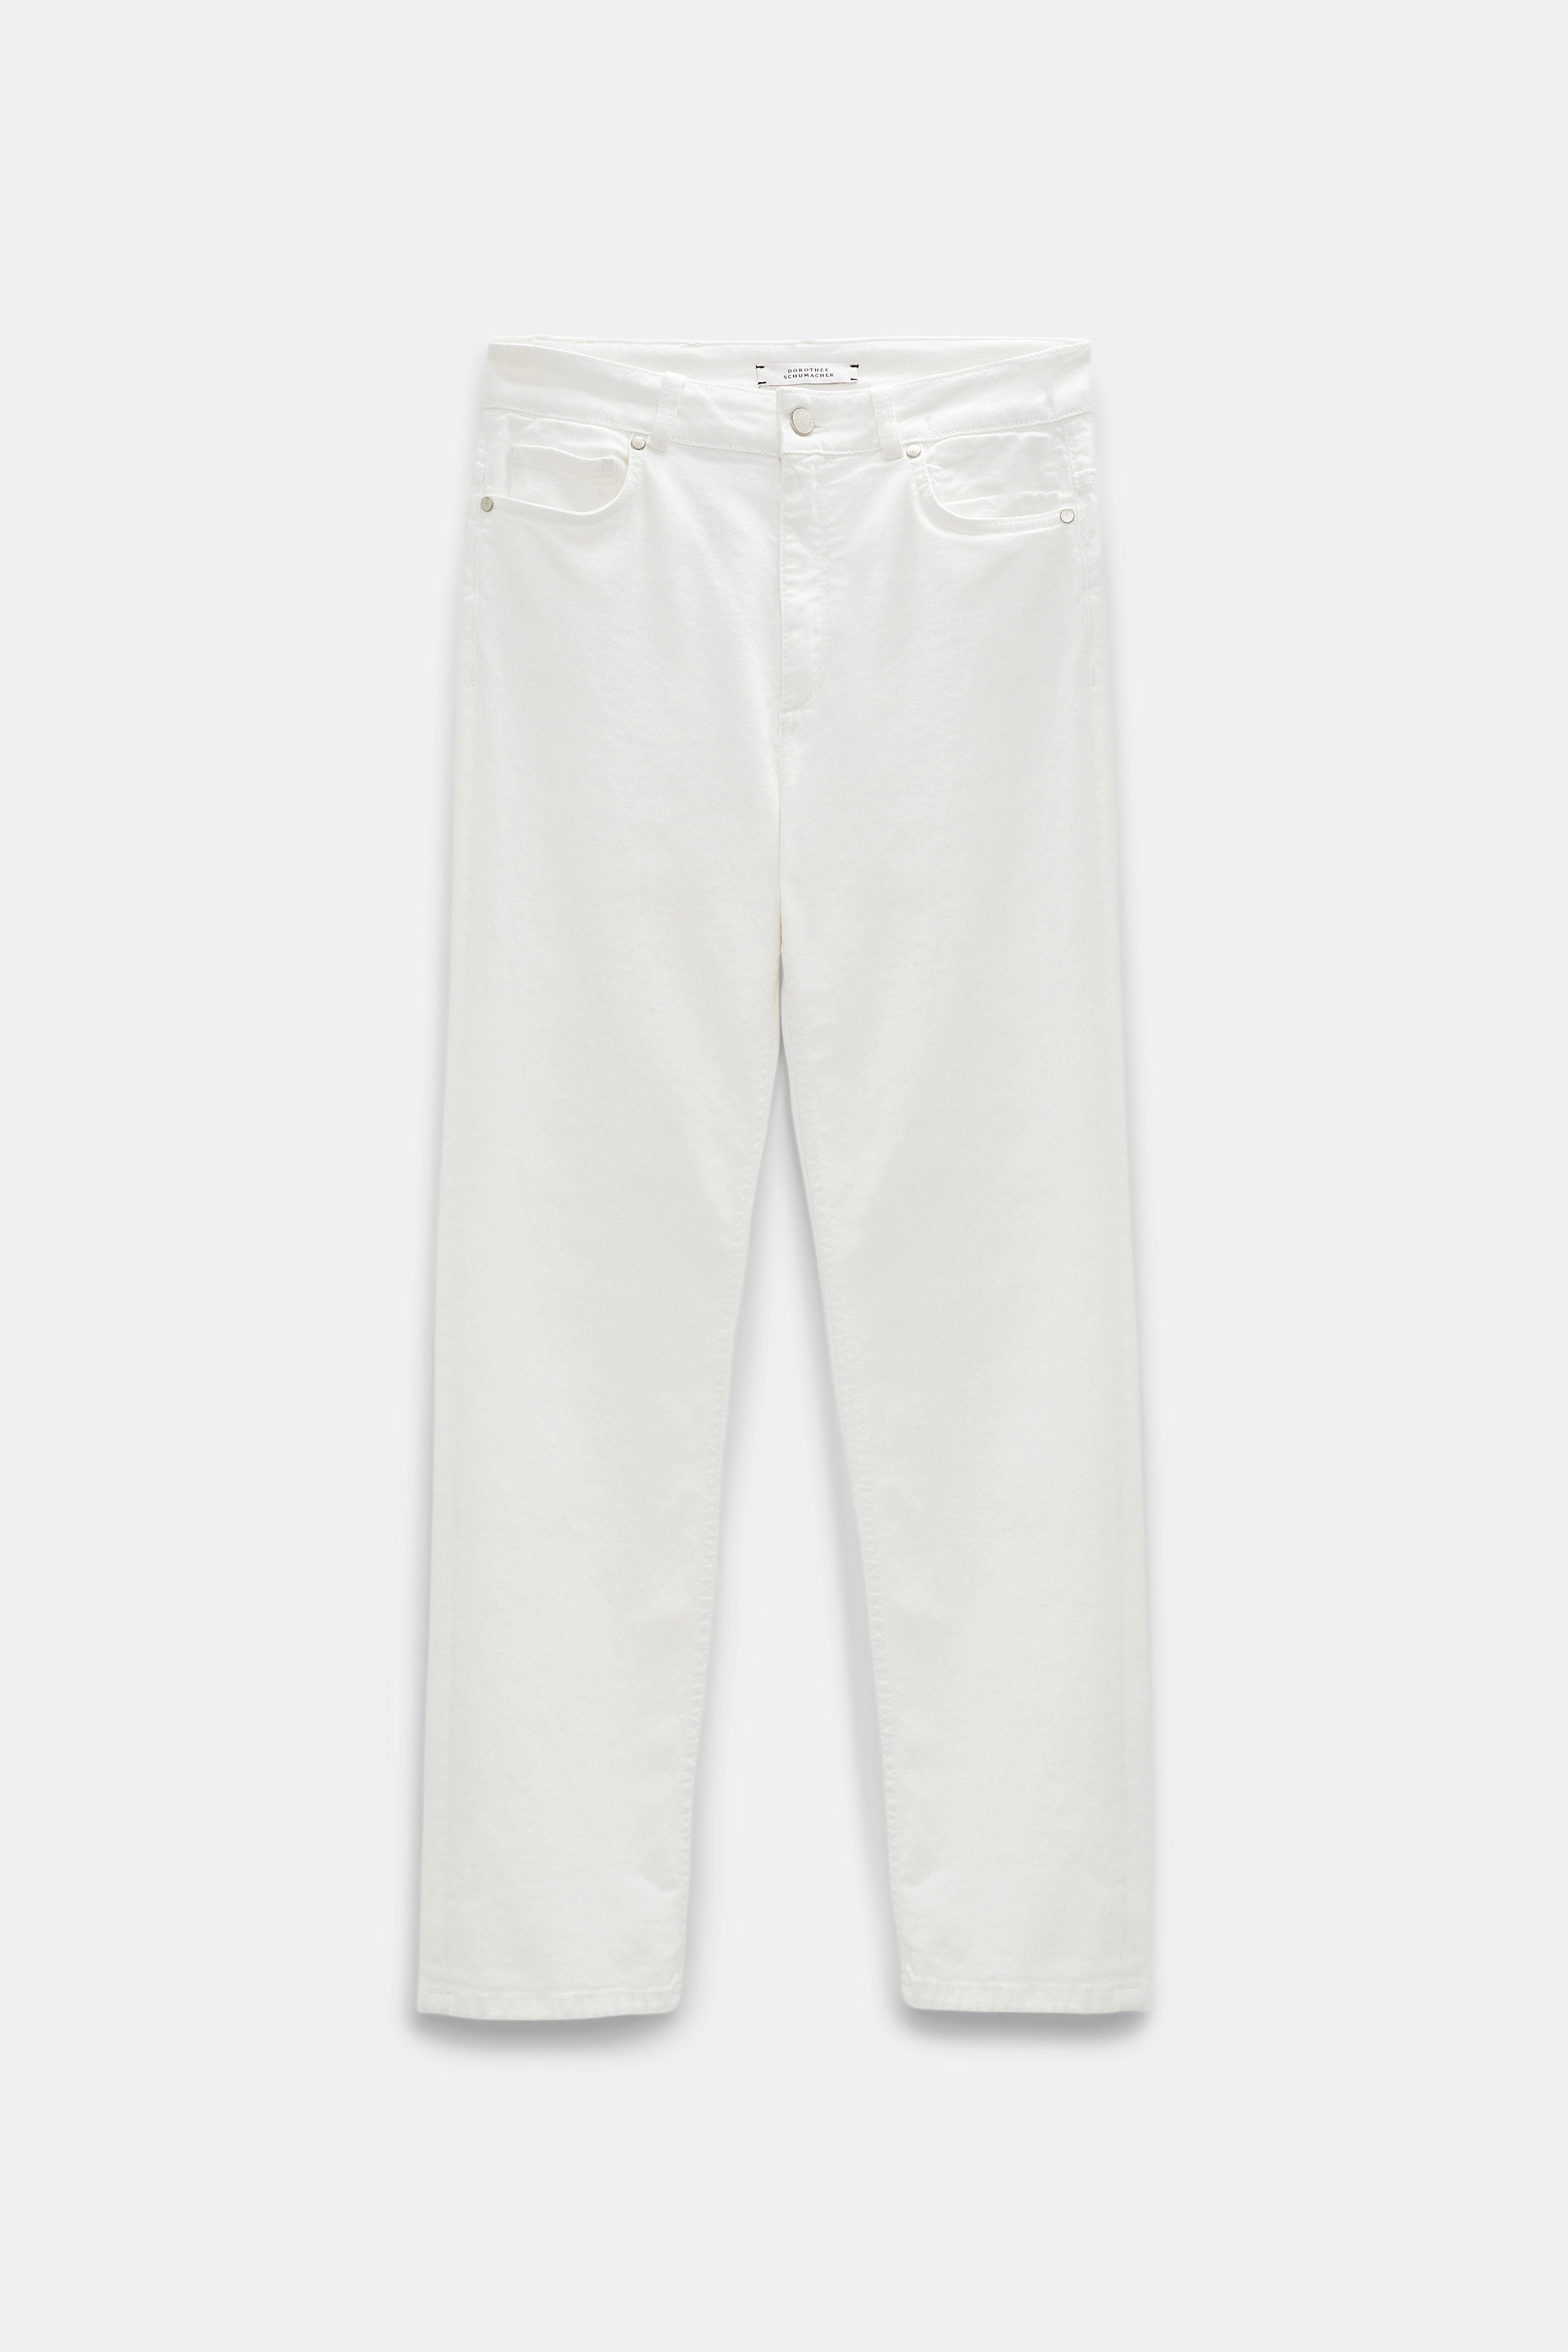 Dorothee Schumacher Denim Love Pants In White